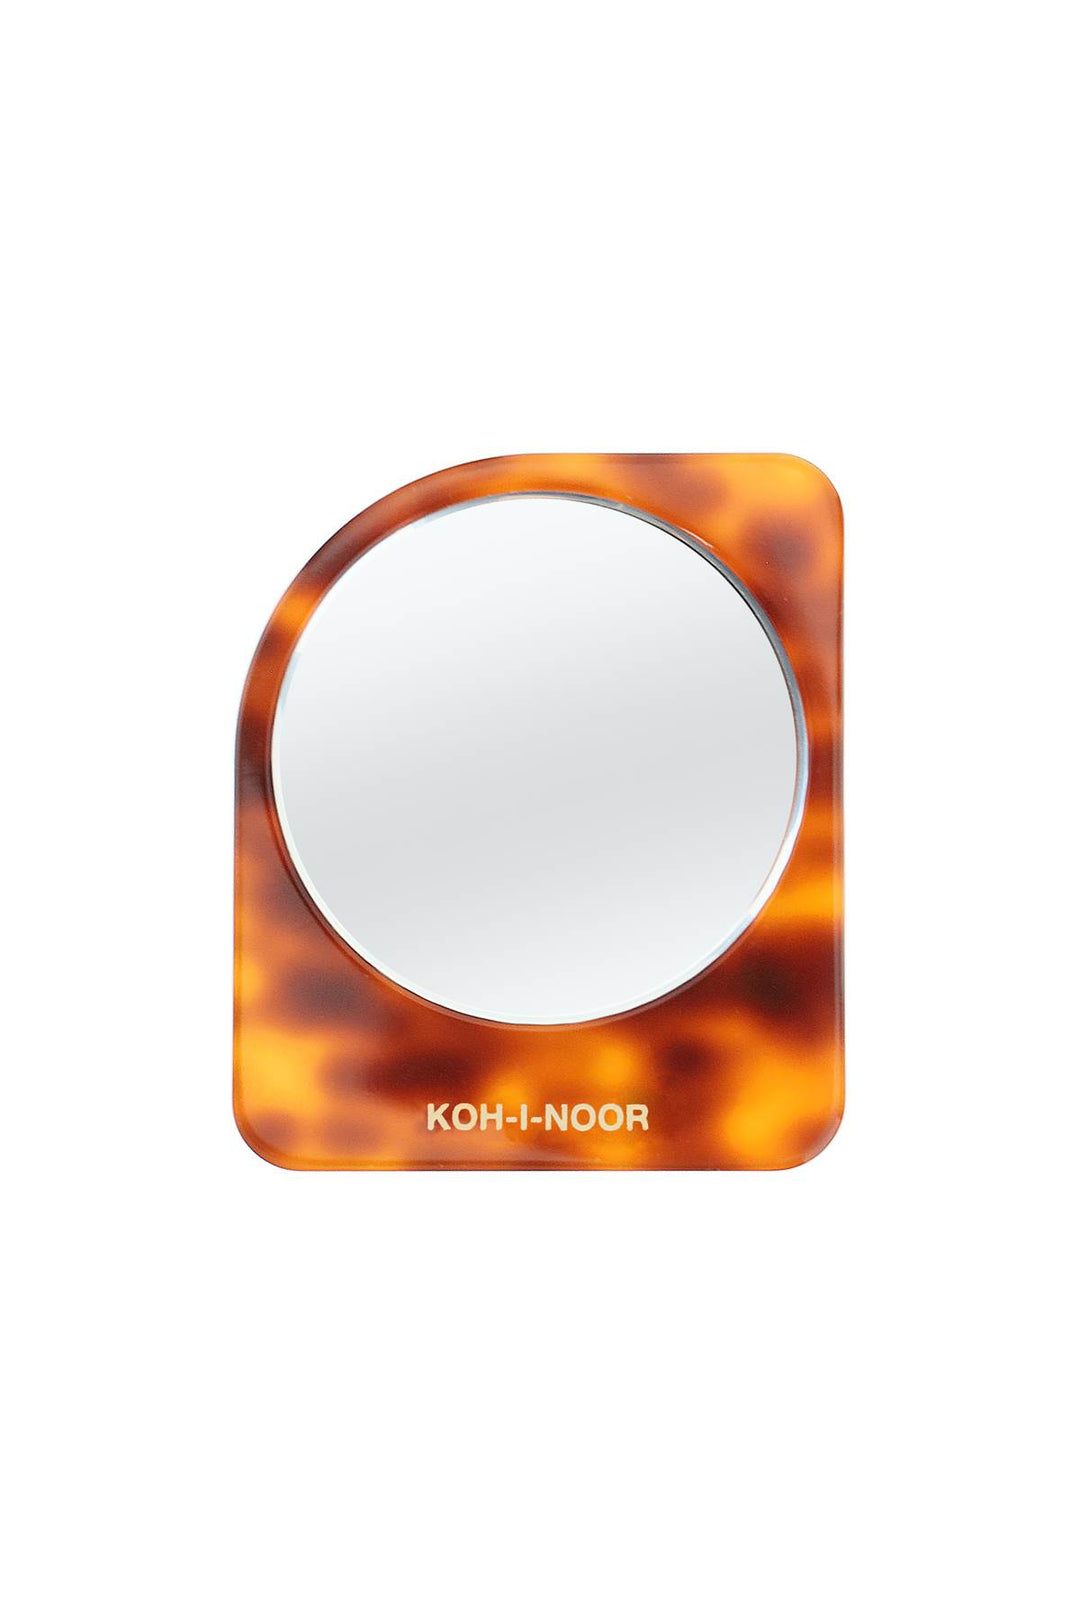 Koh i noor one-side pocket mirror x3-0